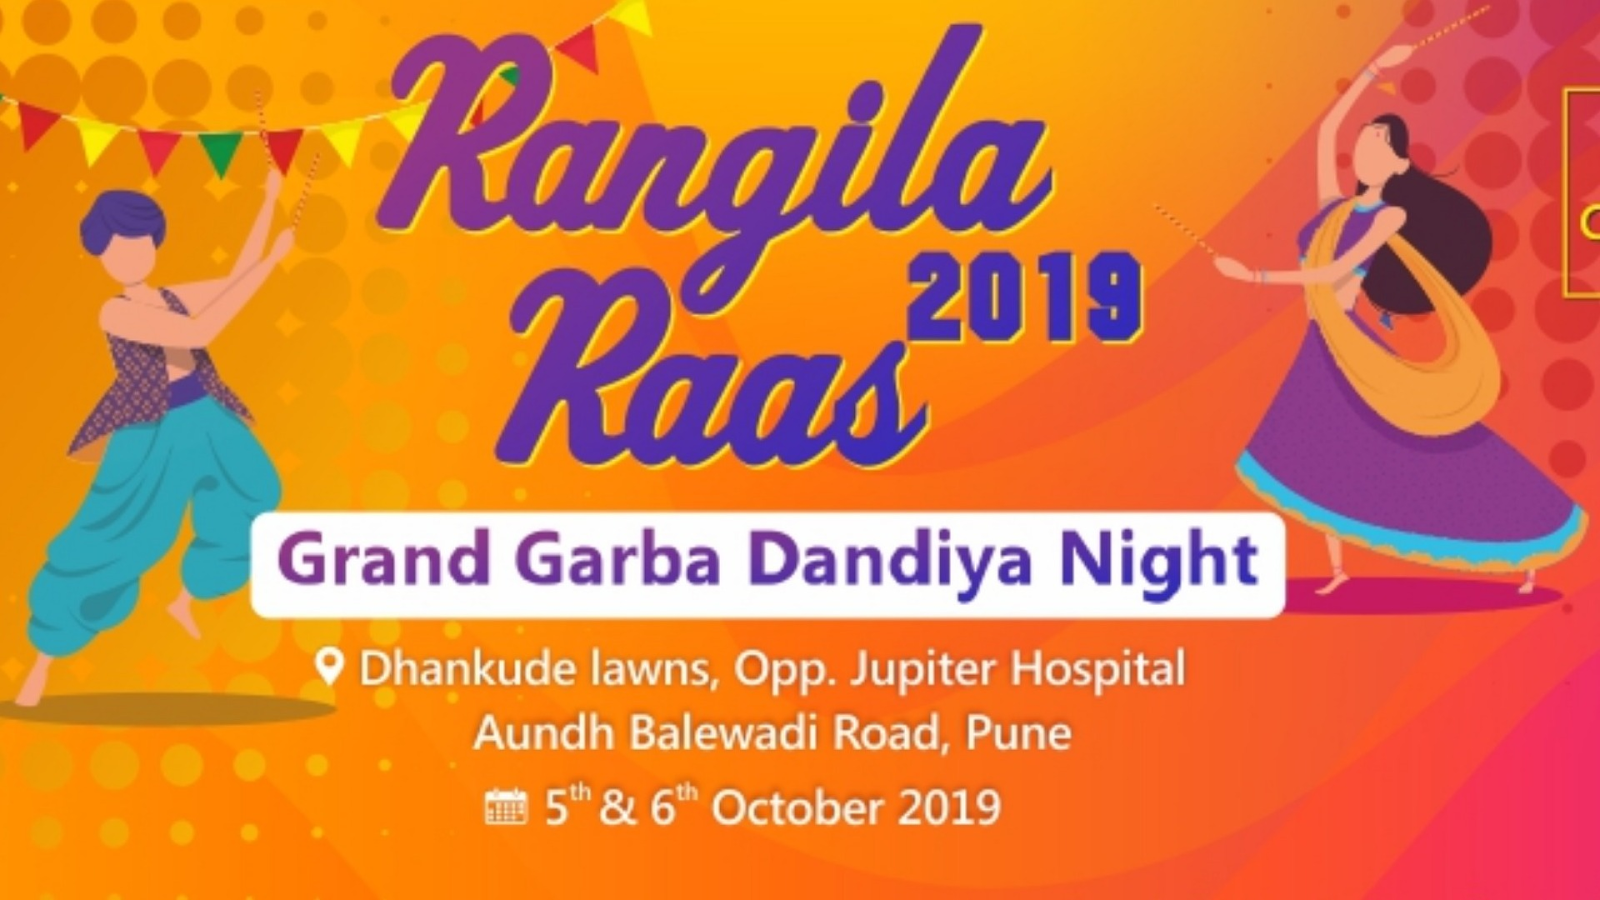 Dandiya Nights in Pune